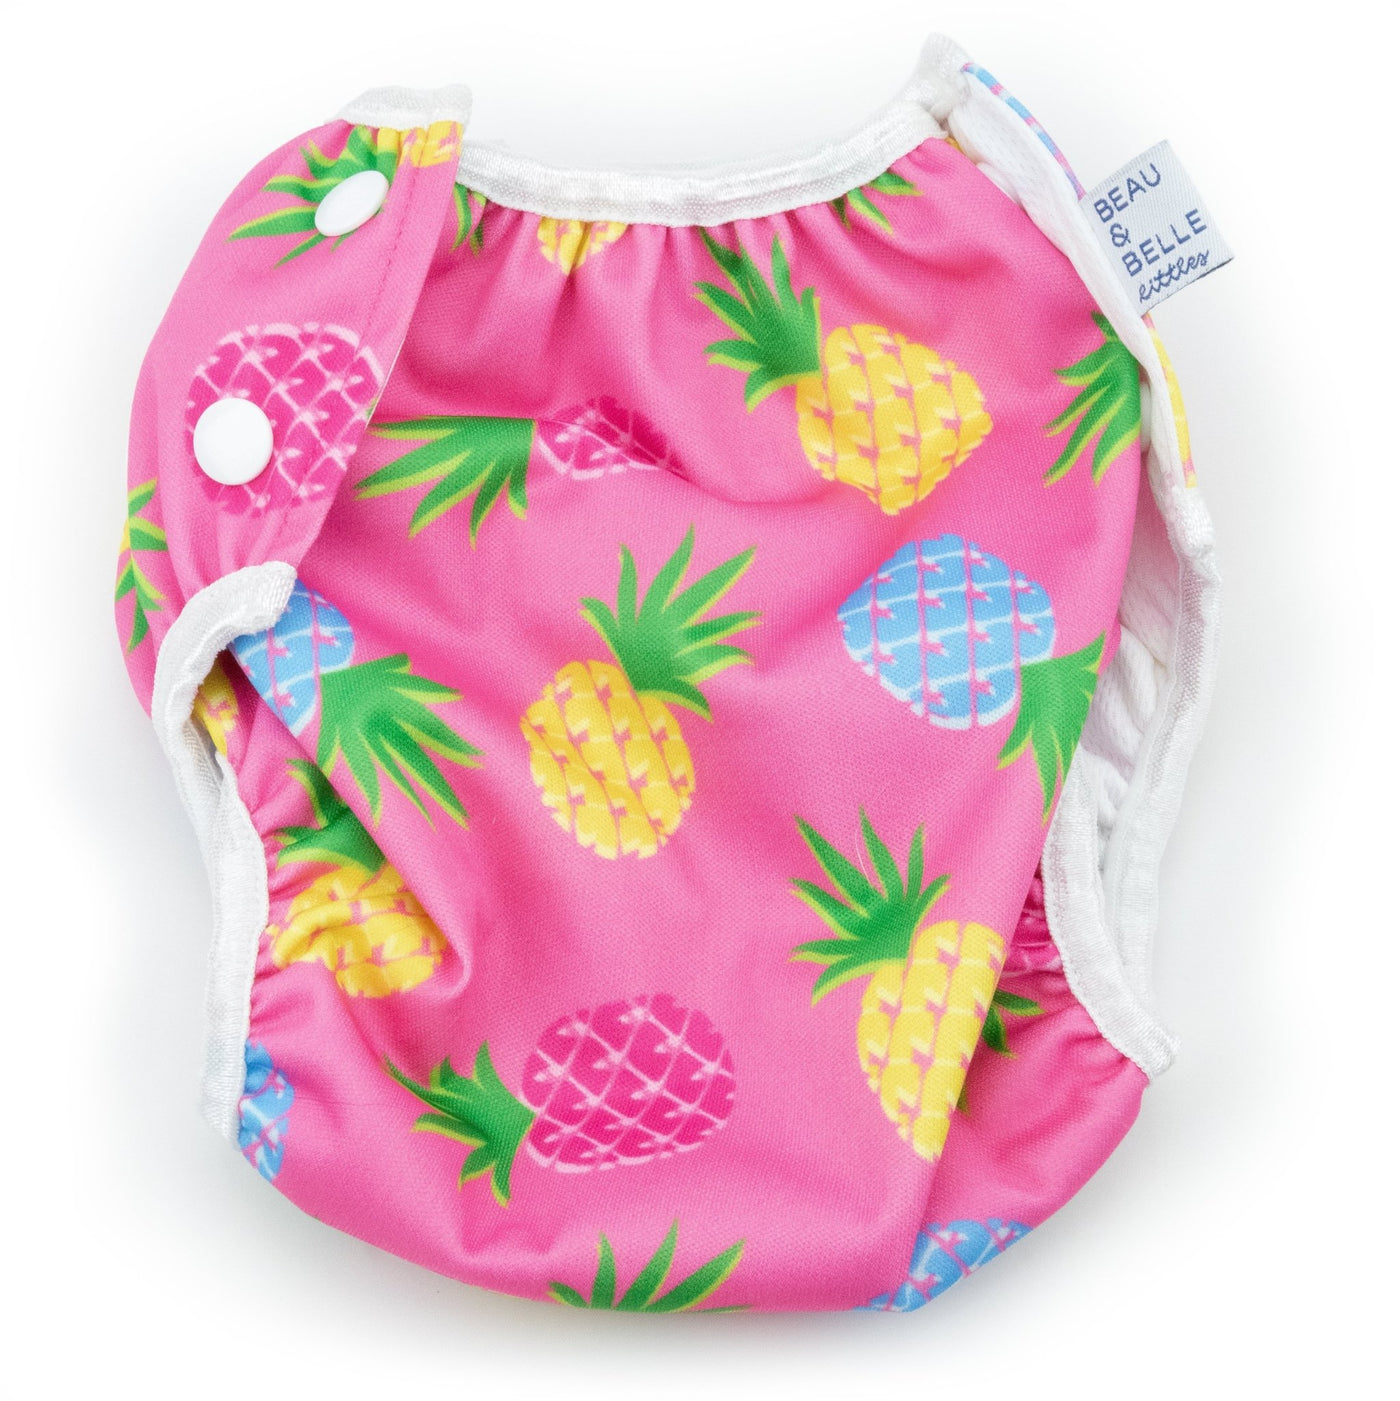 Large Pink Pineapples Nageuret Premium Reusable Swim Diaper, Adjustable 2-5 Years